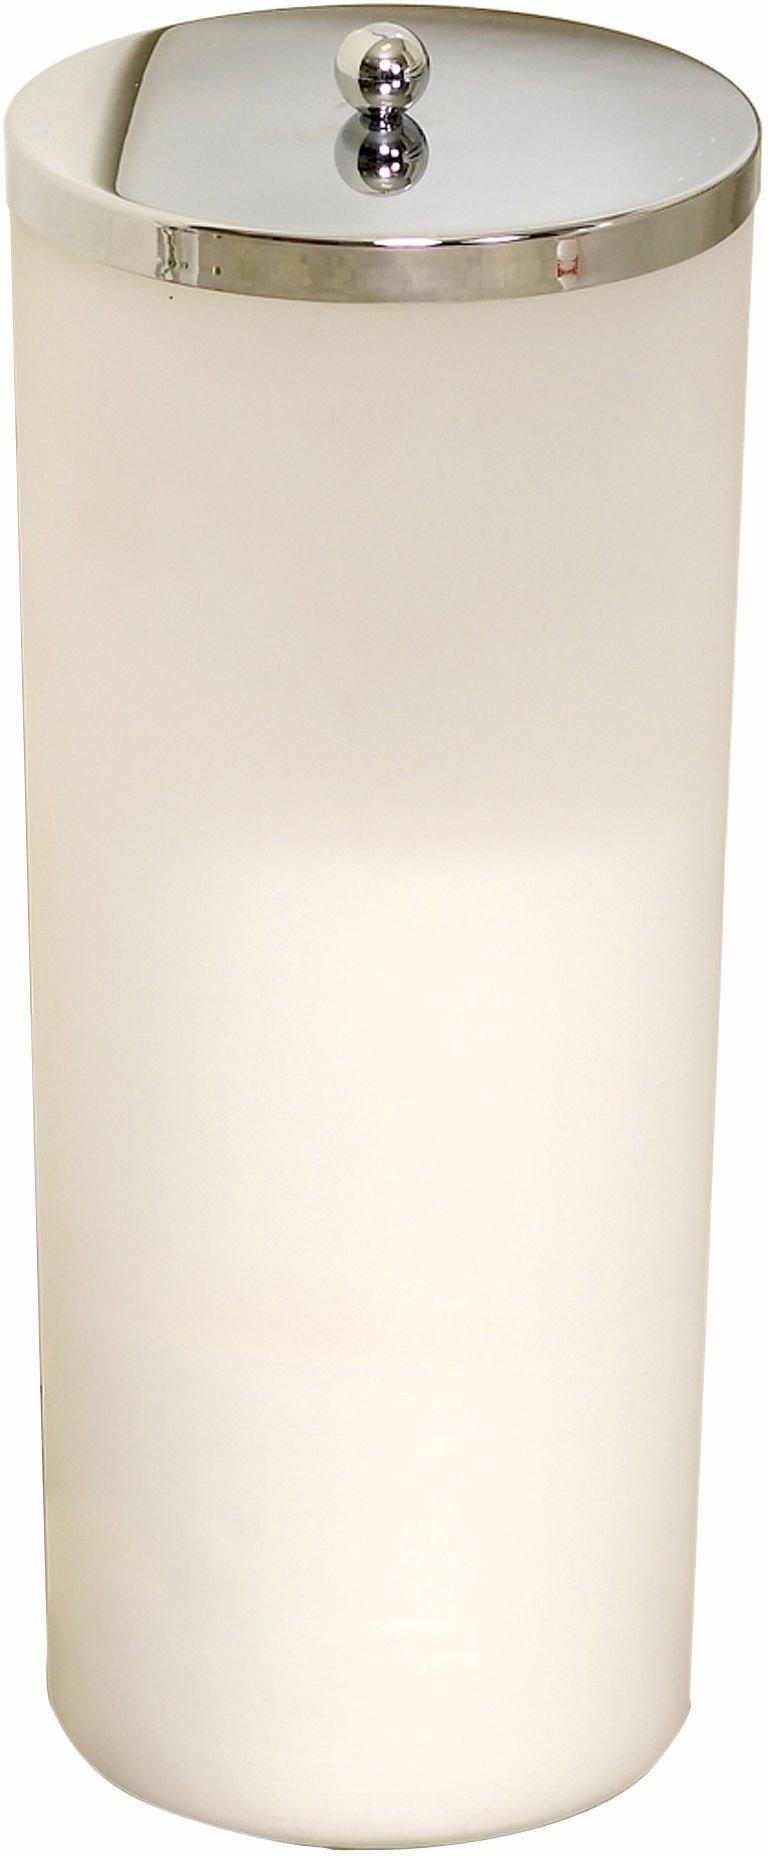 Zenna Home Plastic Toilet Paper Holder